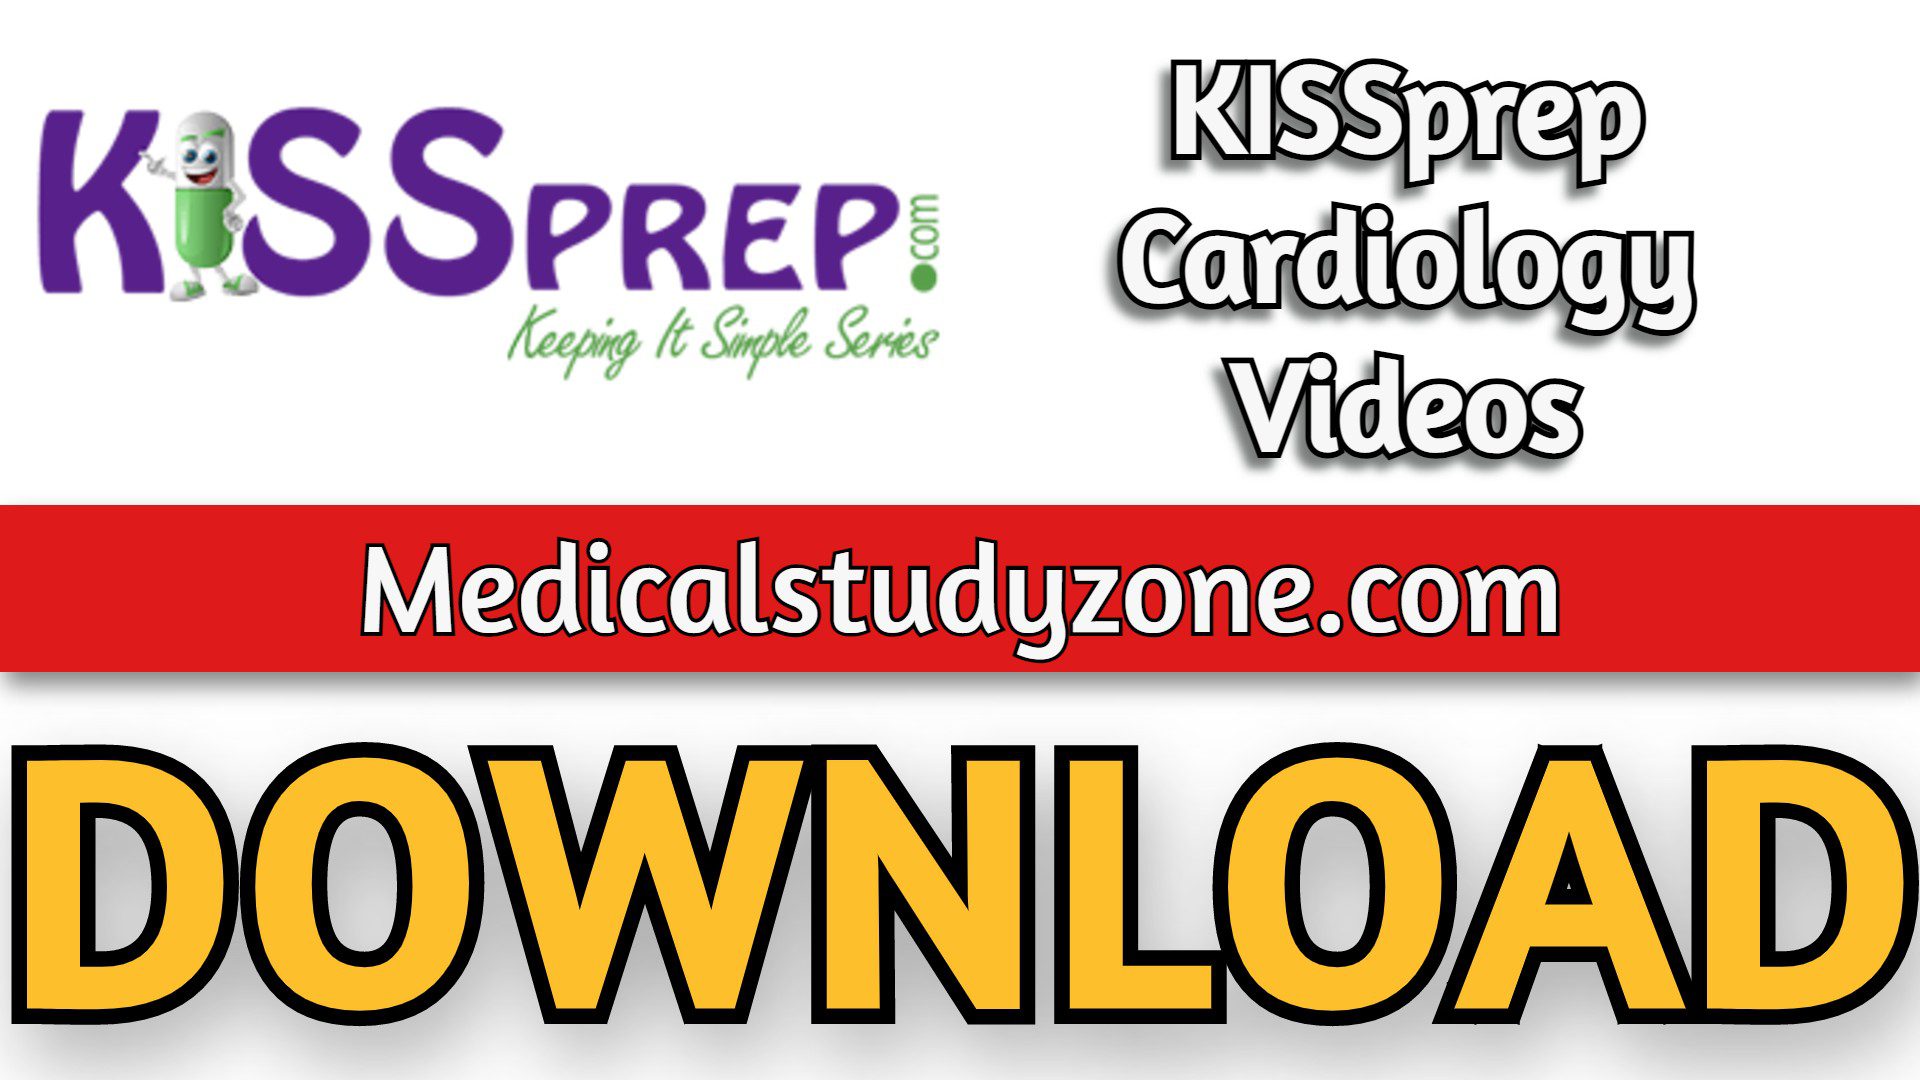 KISSprep Cardiology Videos 2021 Free Download